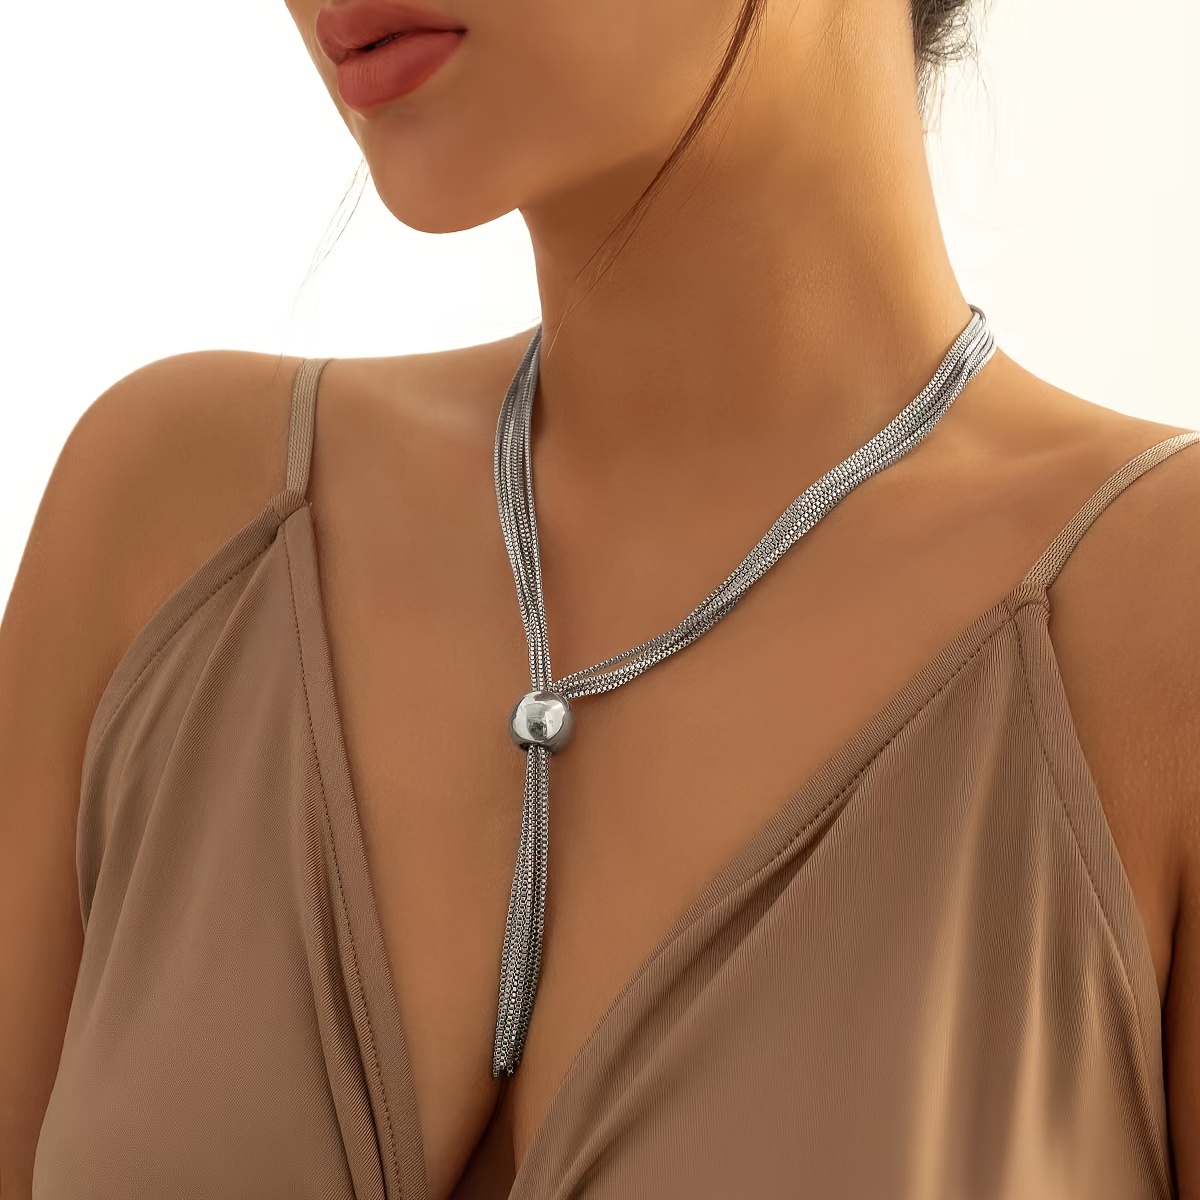 Neck Collarbone Necklace, Shoulder Chain Jewelry